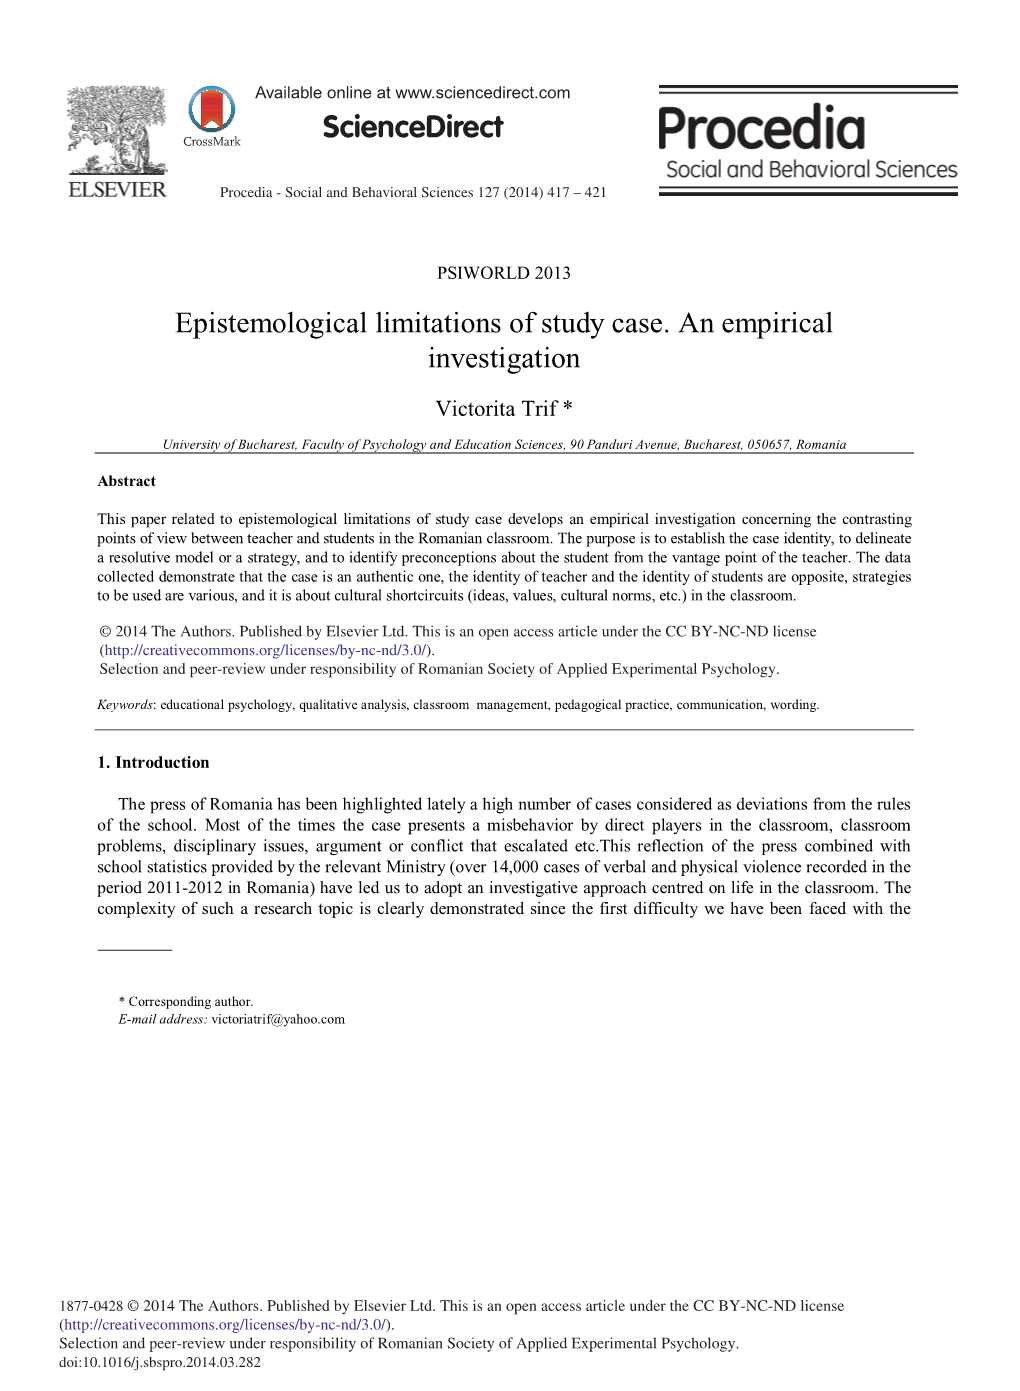 Epistemological Limitations of Study Case. an Empirical Investigation